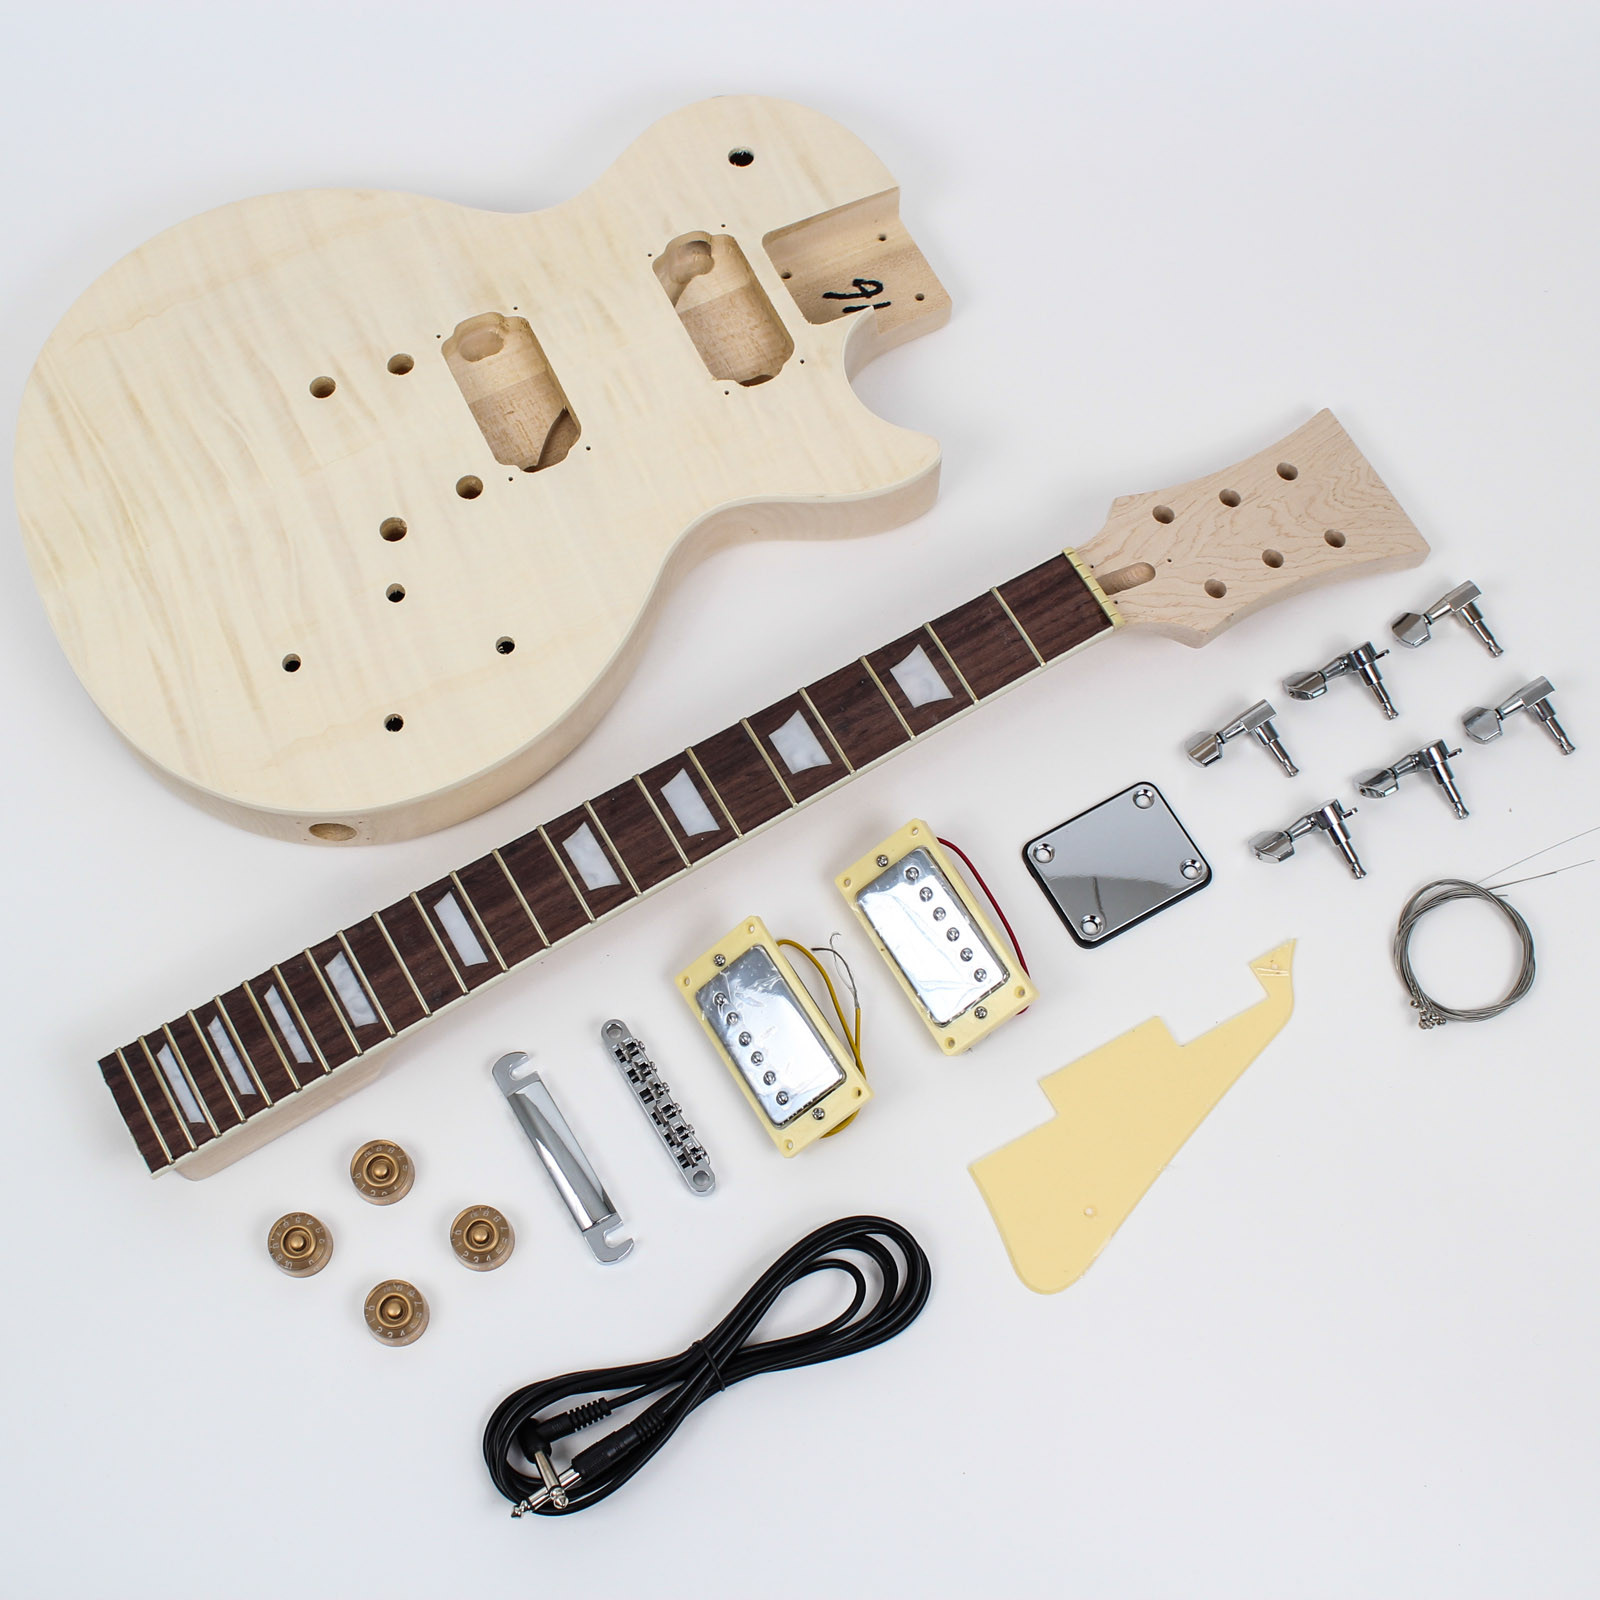 Best ideas about Les Paul DIY Kit
. Save or Pin Les Paul Style Guitar Kit Flame Maple DIY Guitars Now.